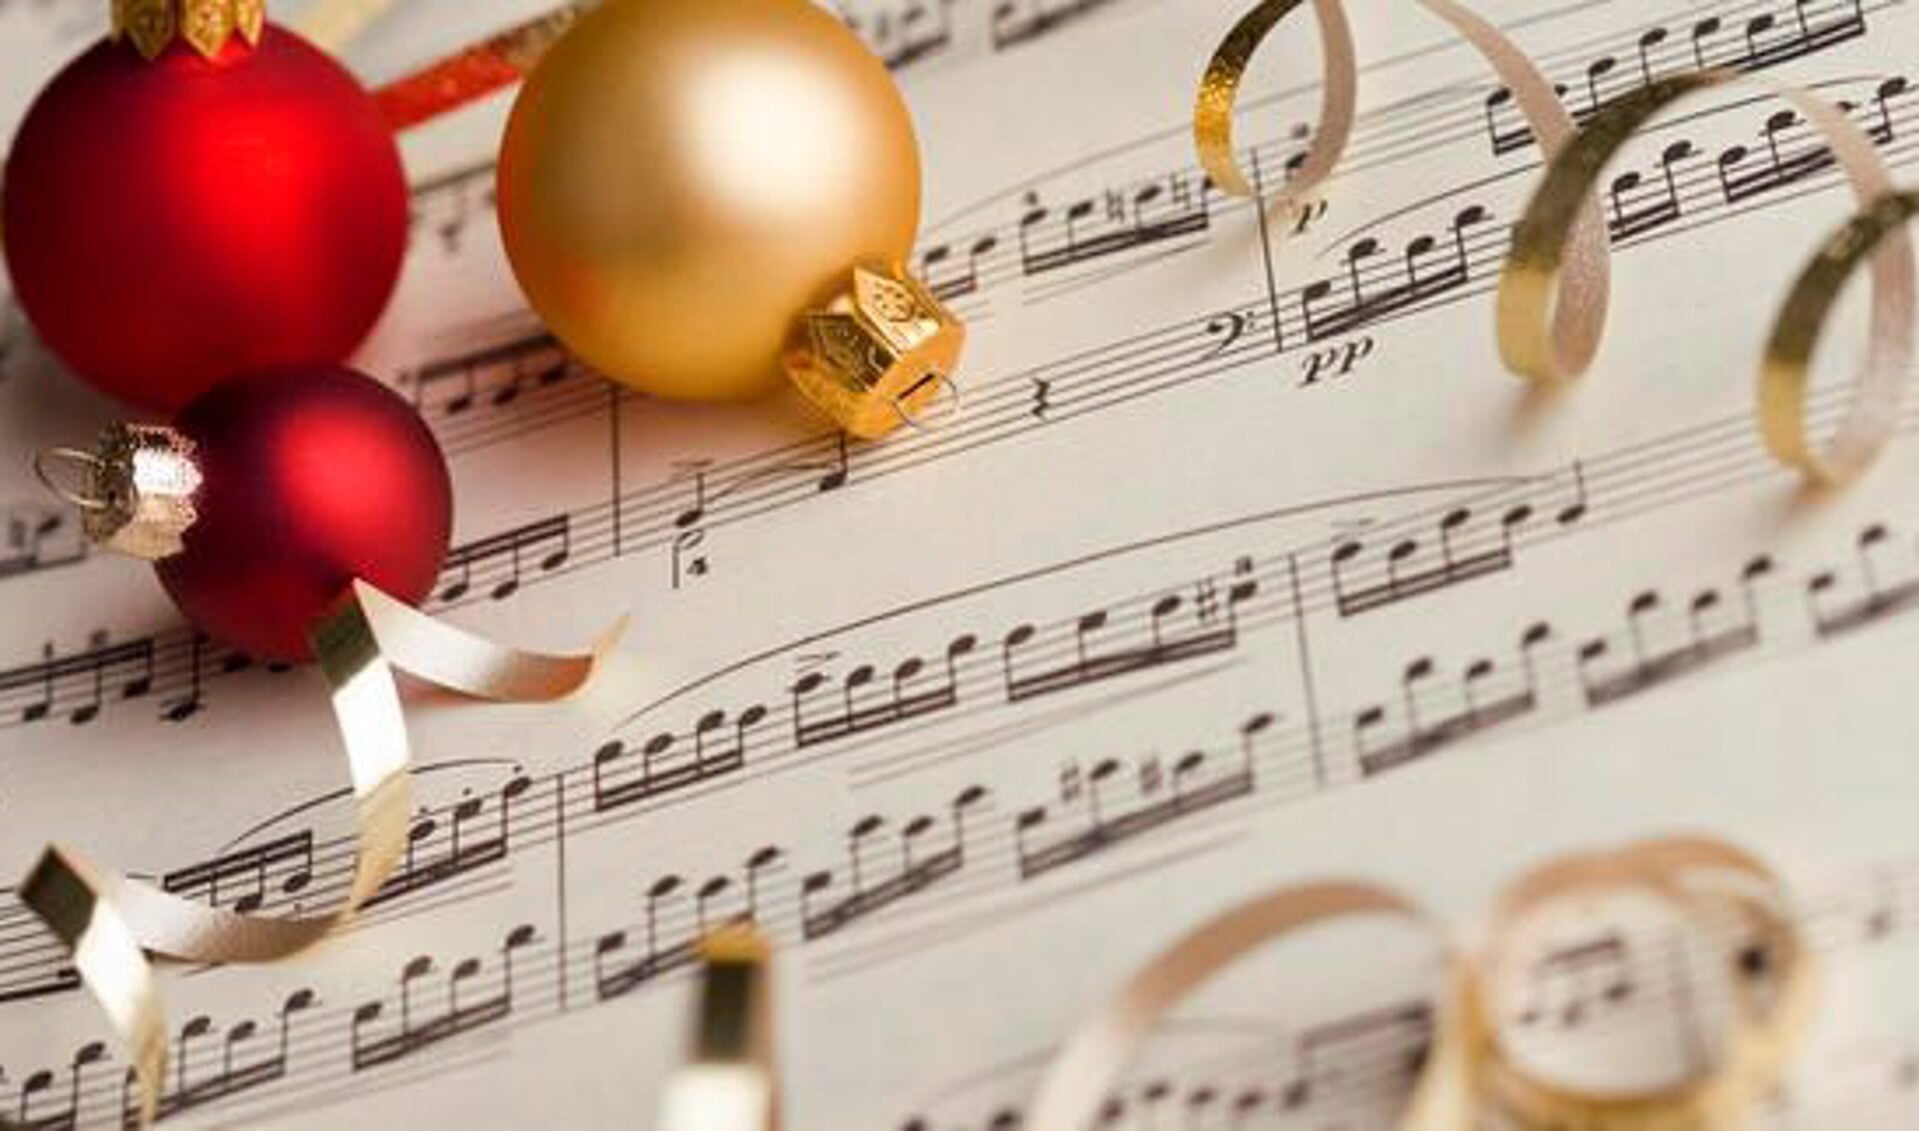 Middelseeuwse muziek in kerstsfeer